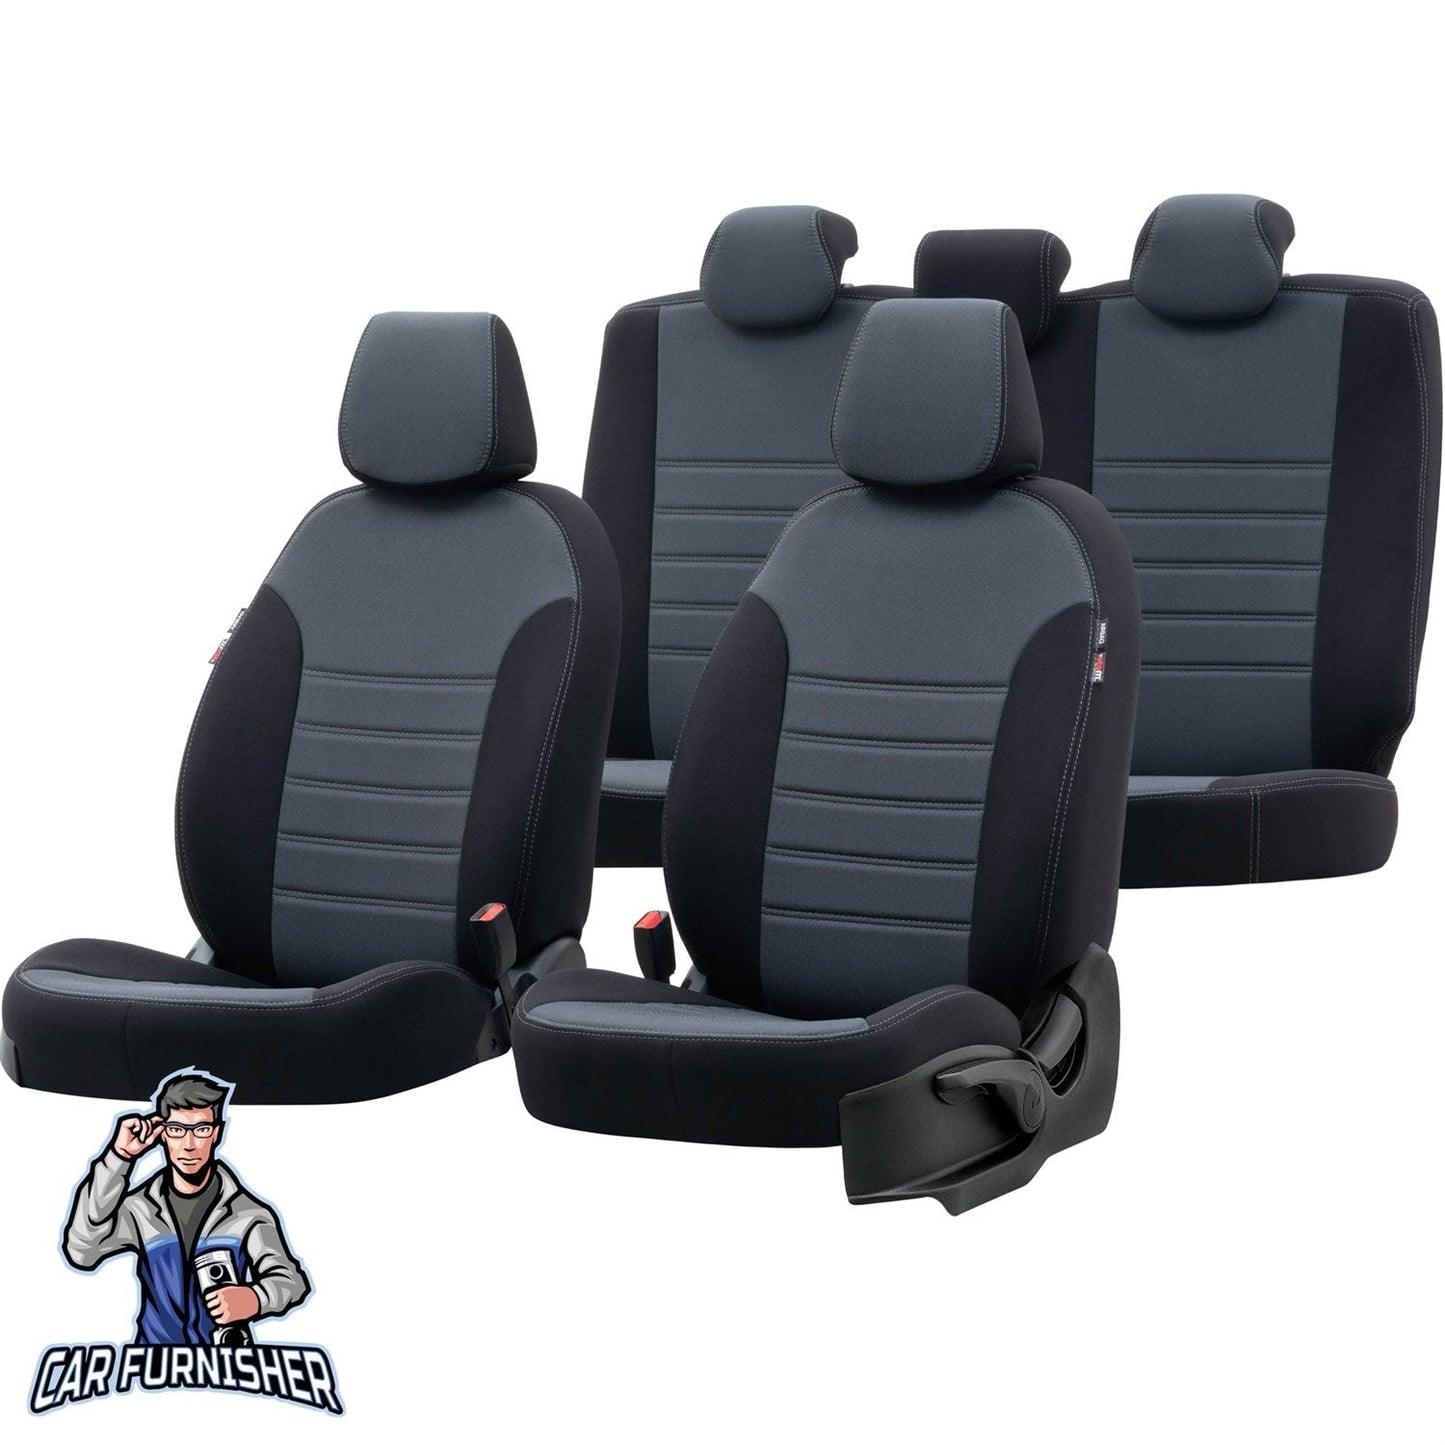 Honda HRV Seat Covers Original Jacquard Design Smoked Black Jacquard Fabric